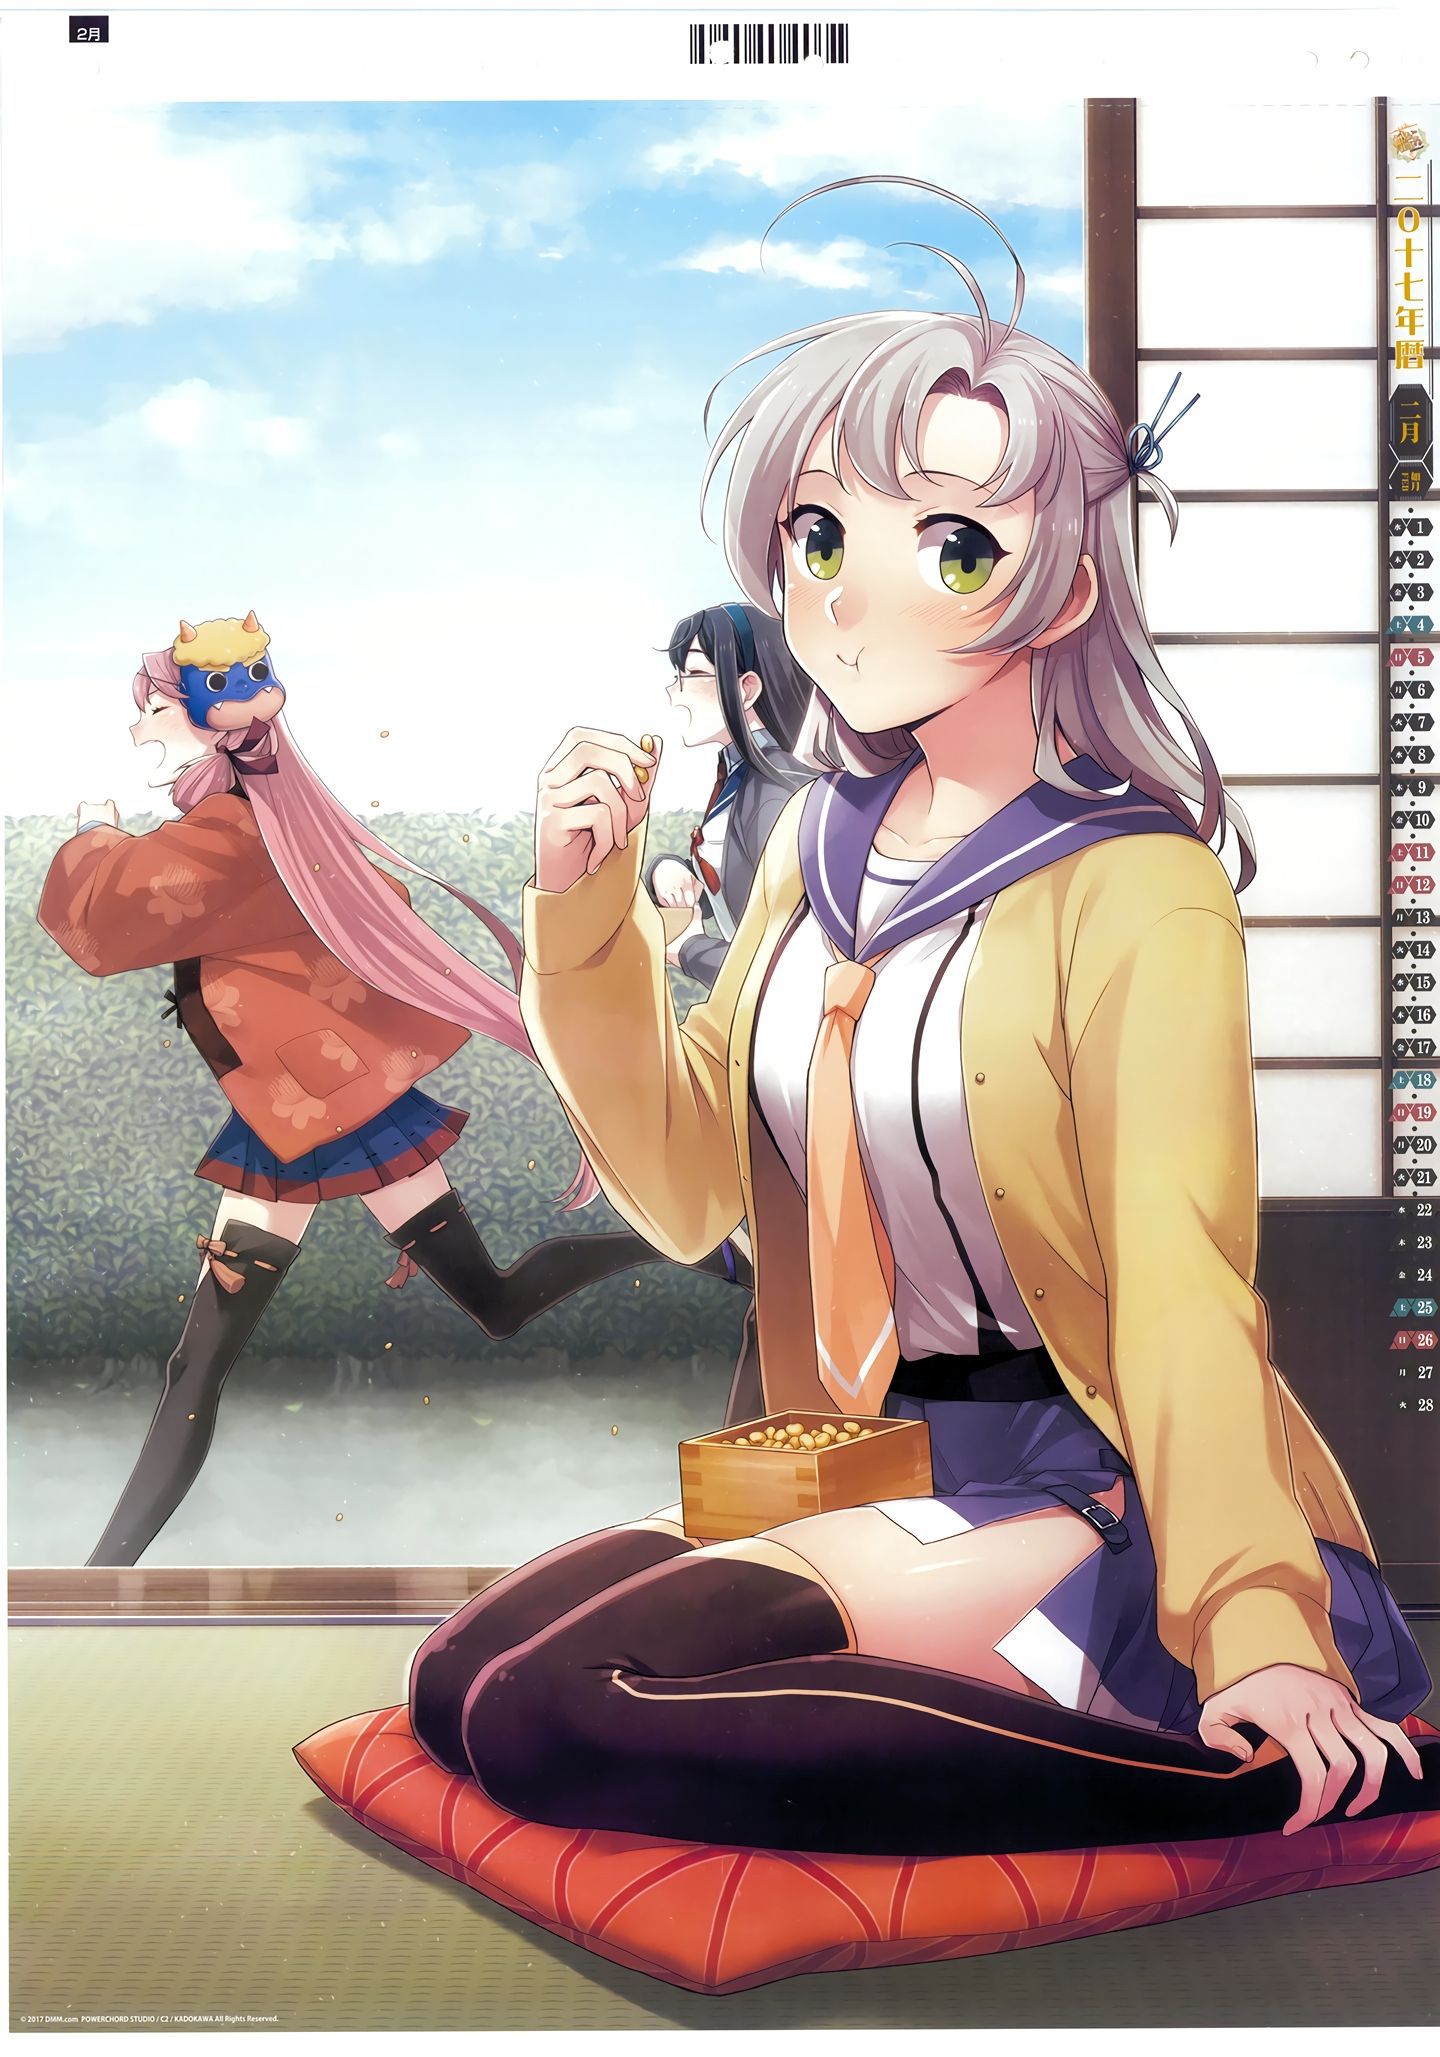 [Secondary ZIP] beautiful girl image summary of the Setsubun system has passed 7